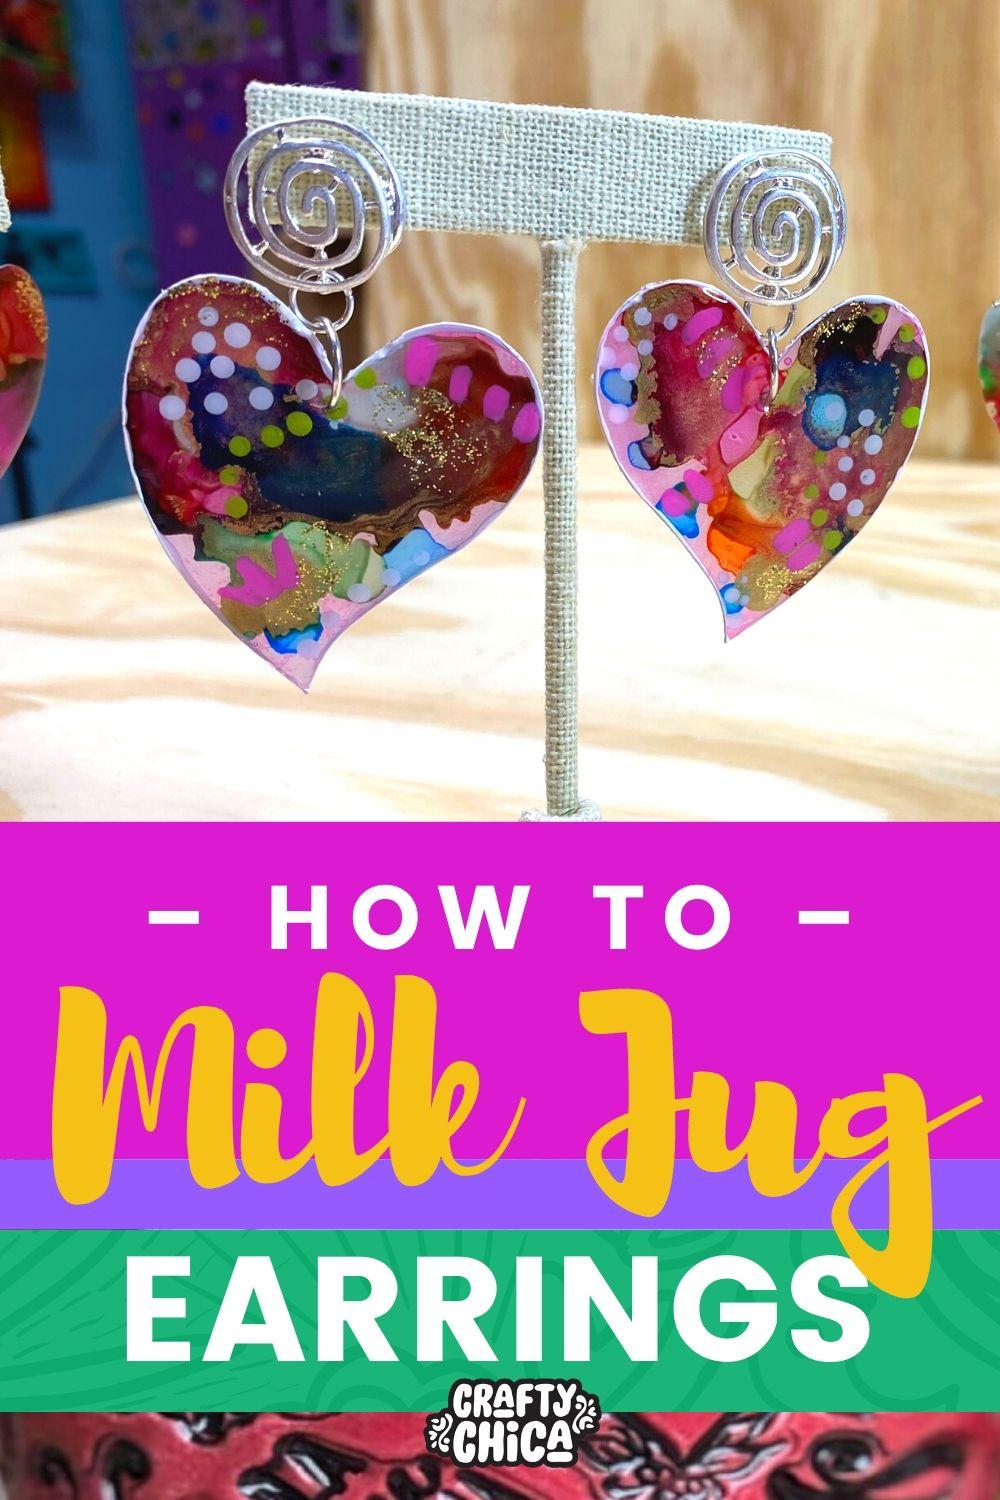 How to make milk jug earrings! #craftychica #siempreleche #ad